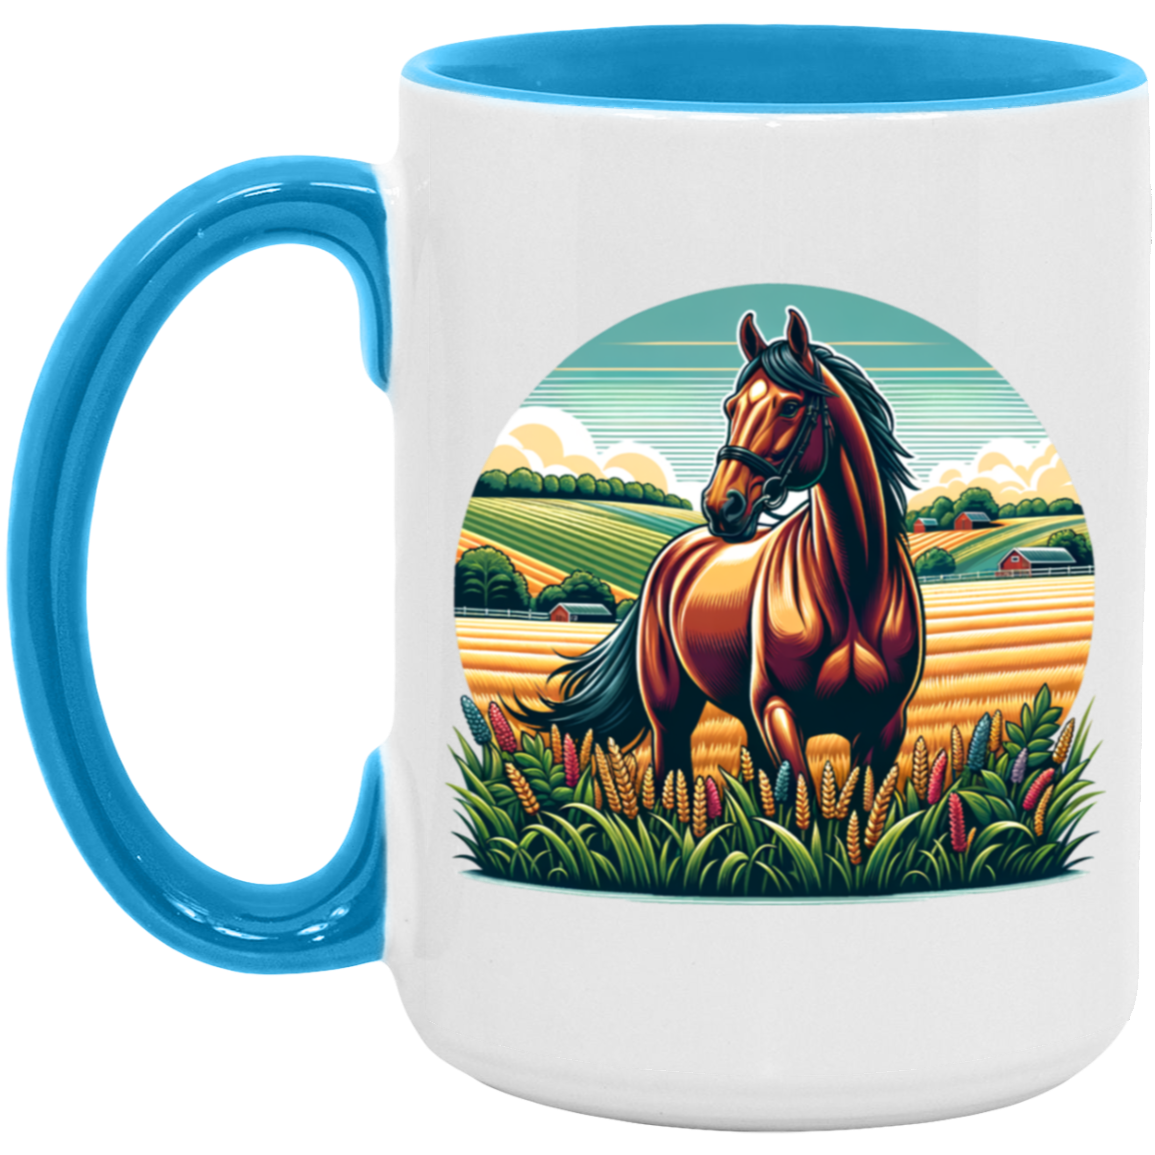 Bay Horse on Farm - Mugs